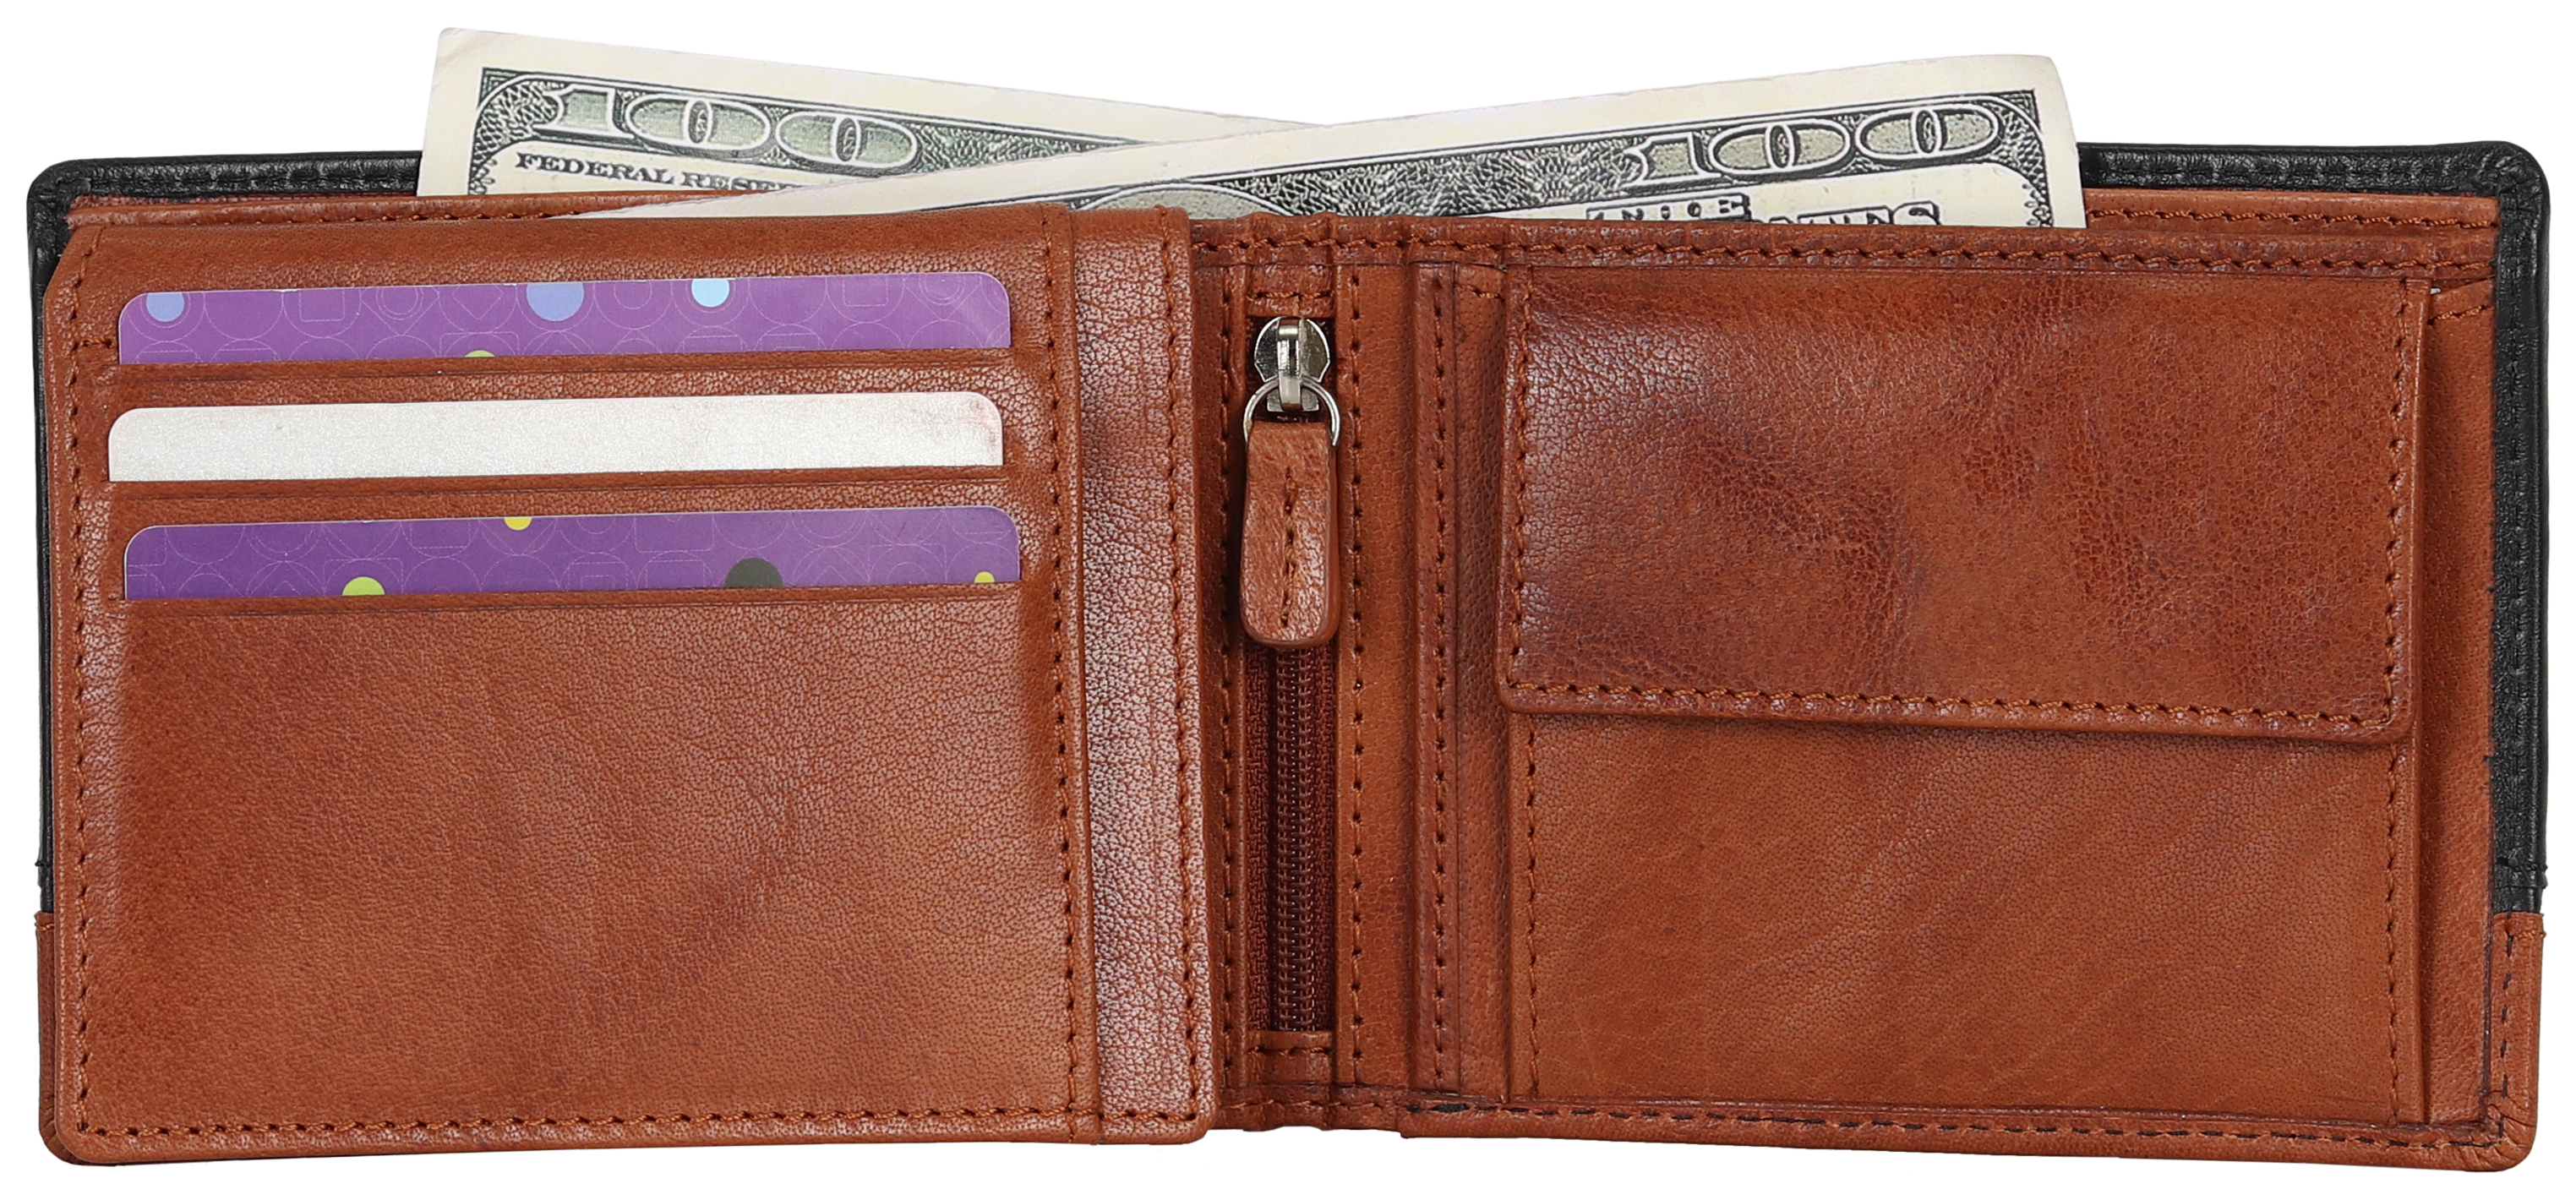 BOL Bi Fold Wallet Black/Brown